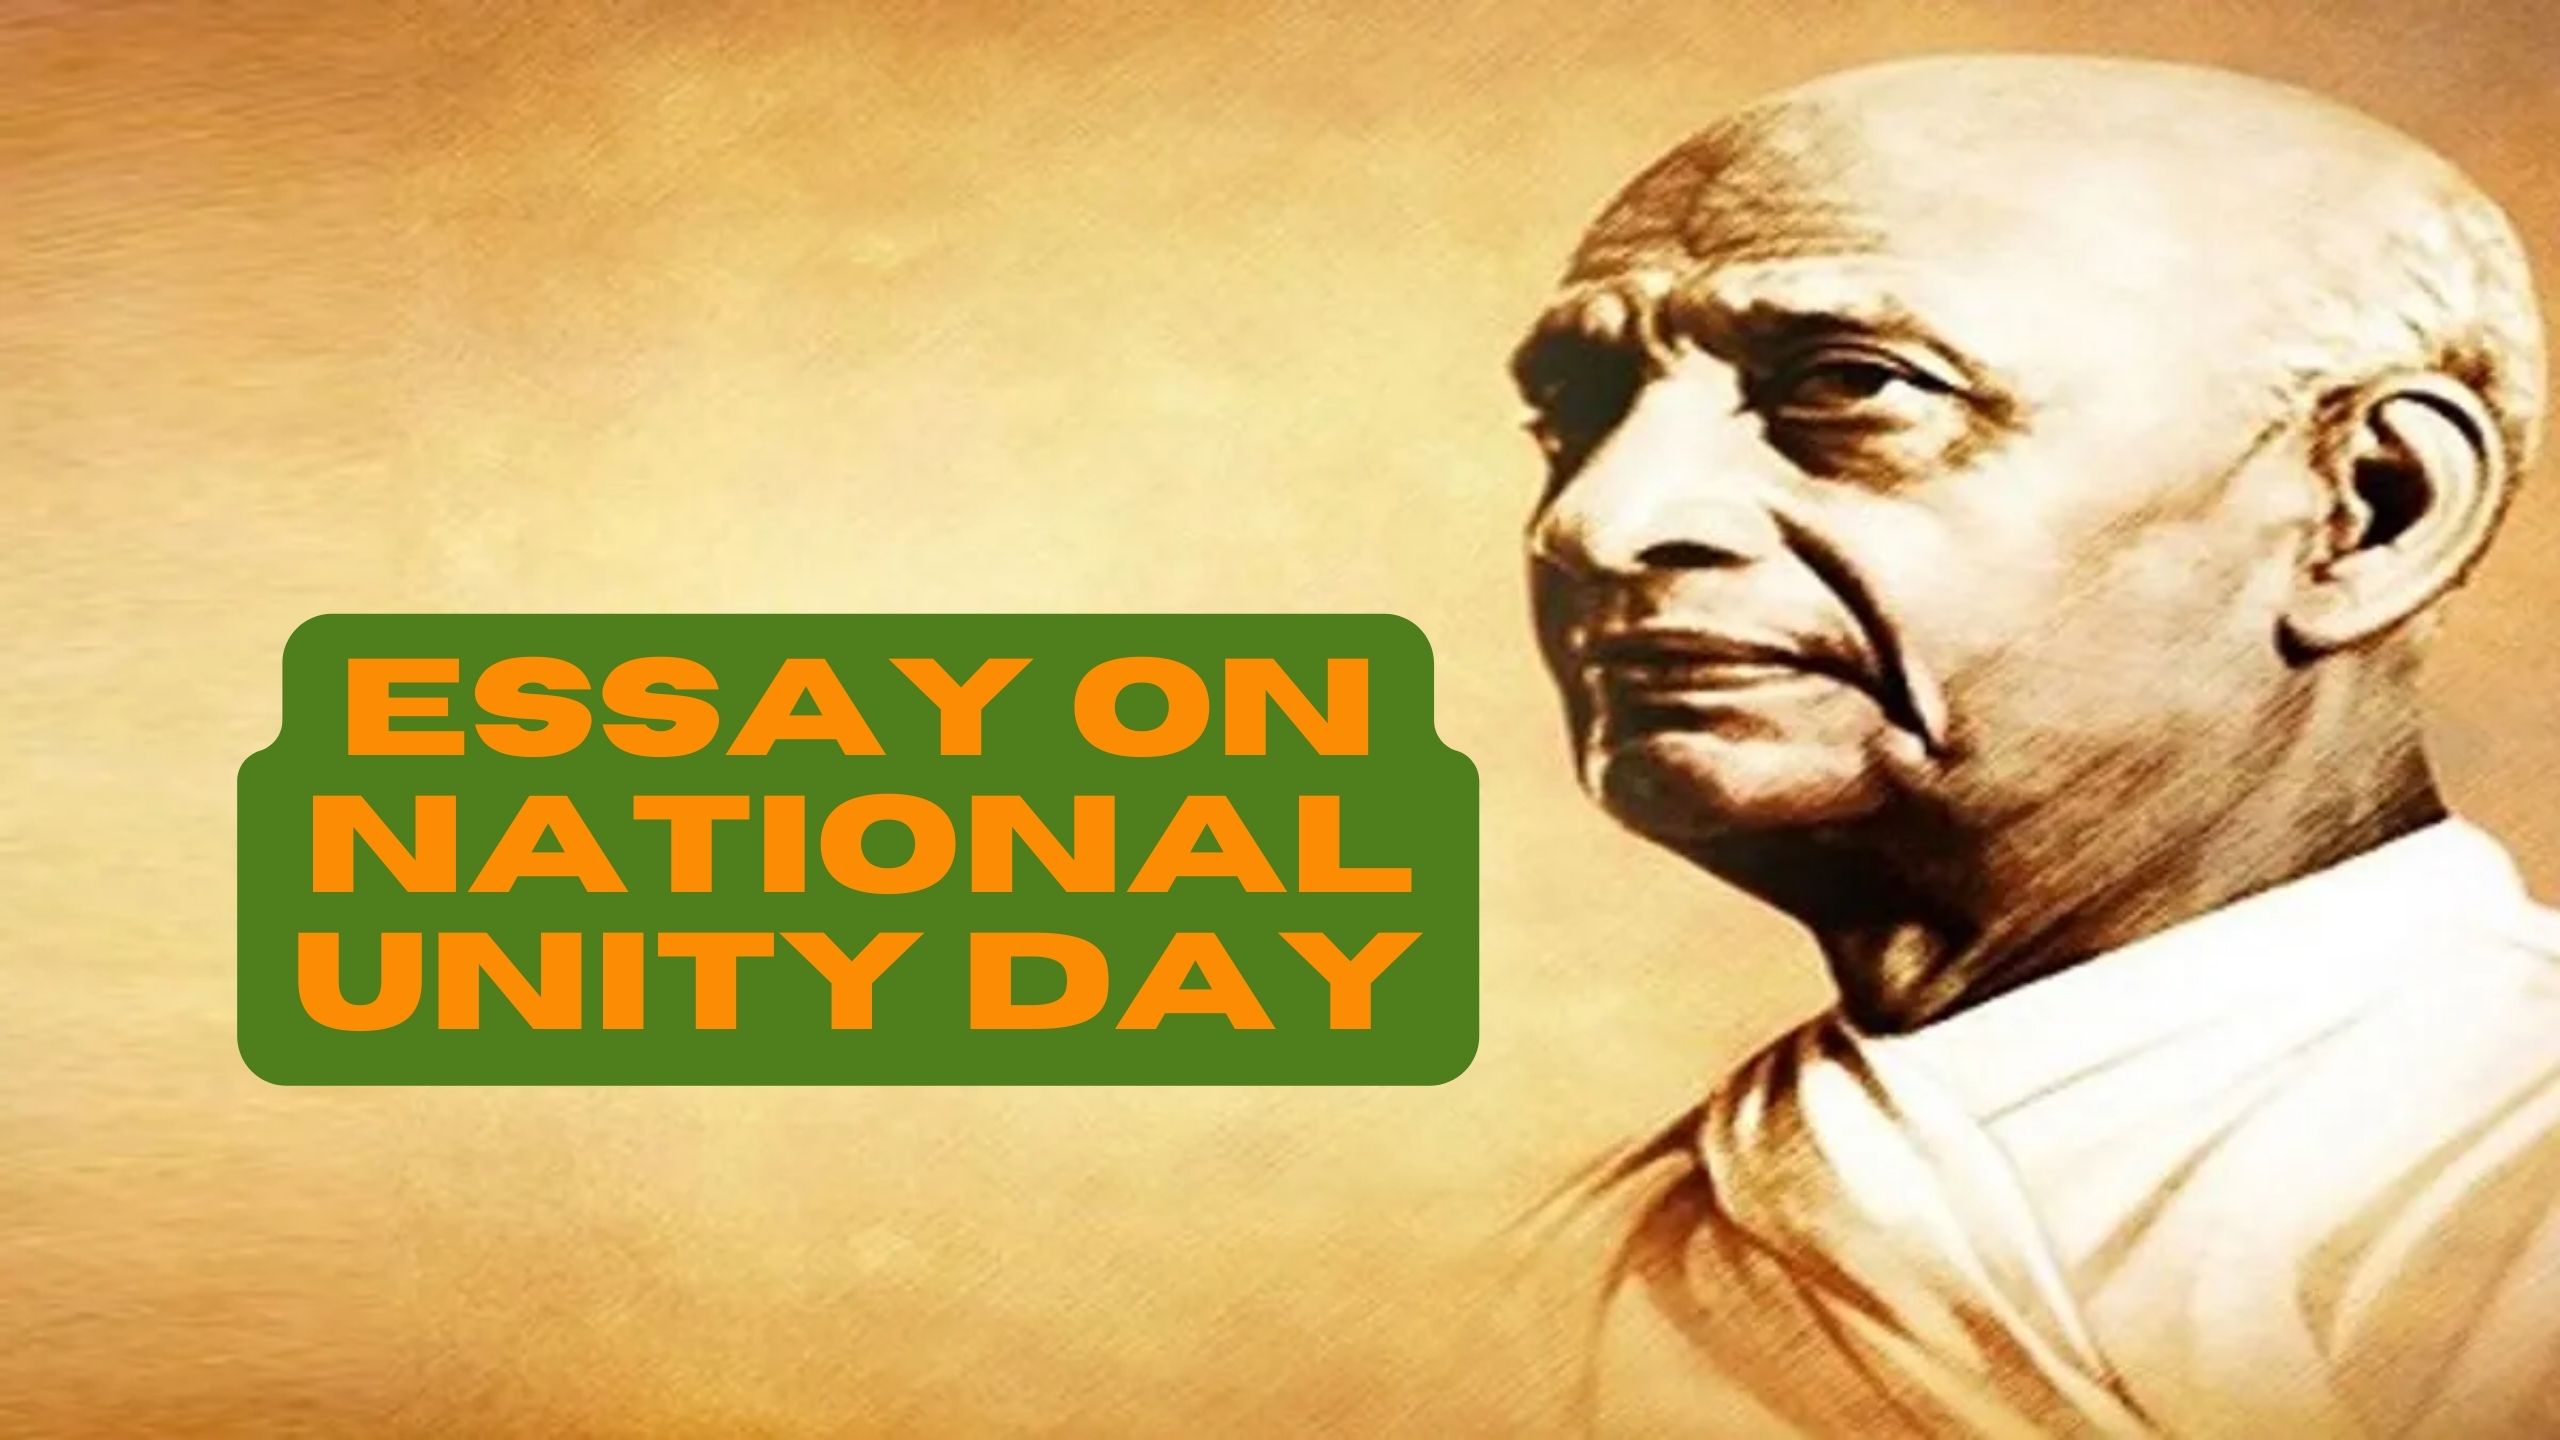 Essay on National Unity Day